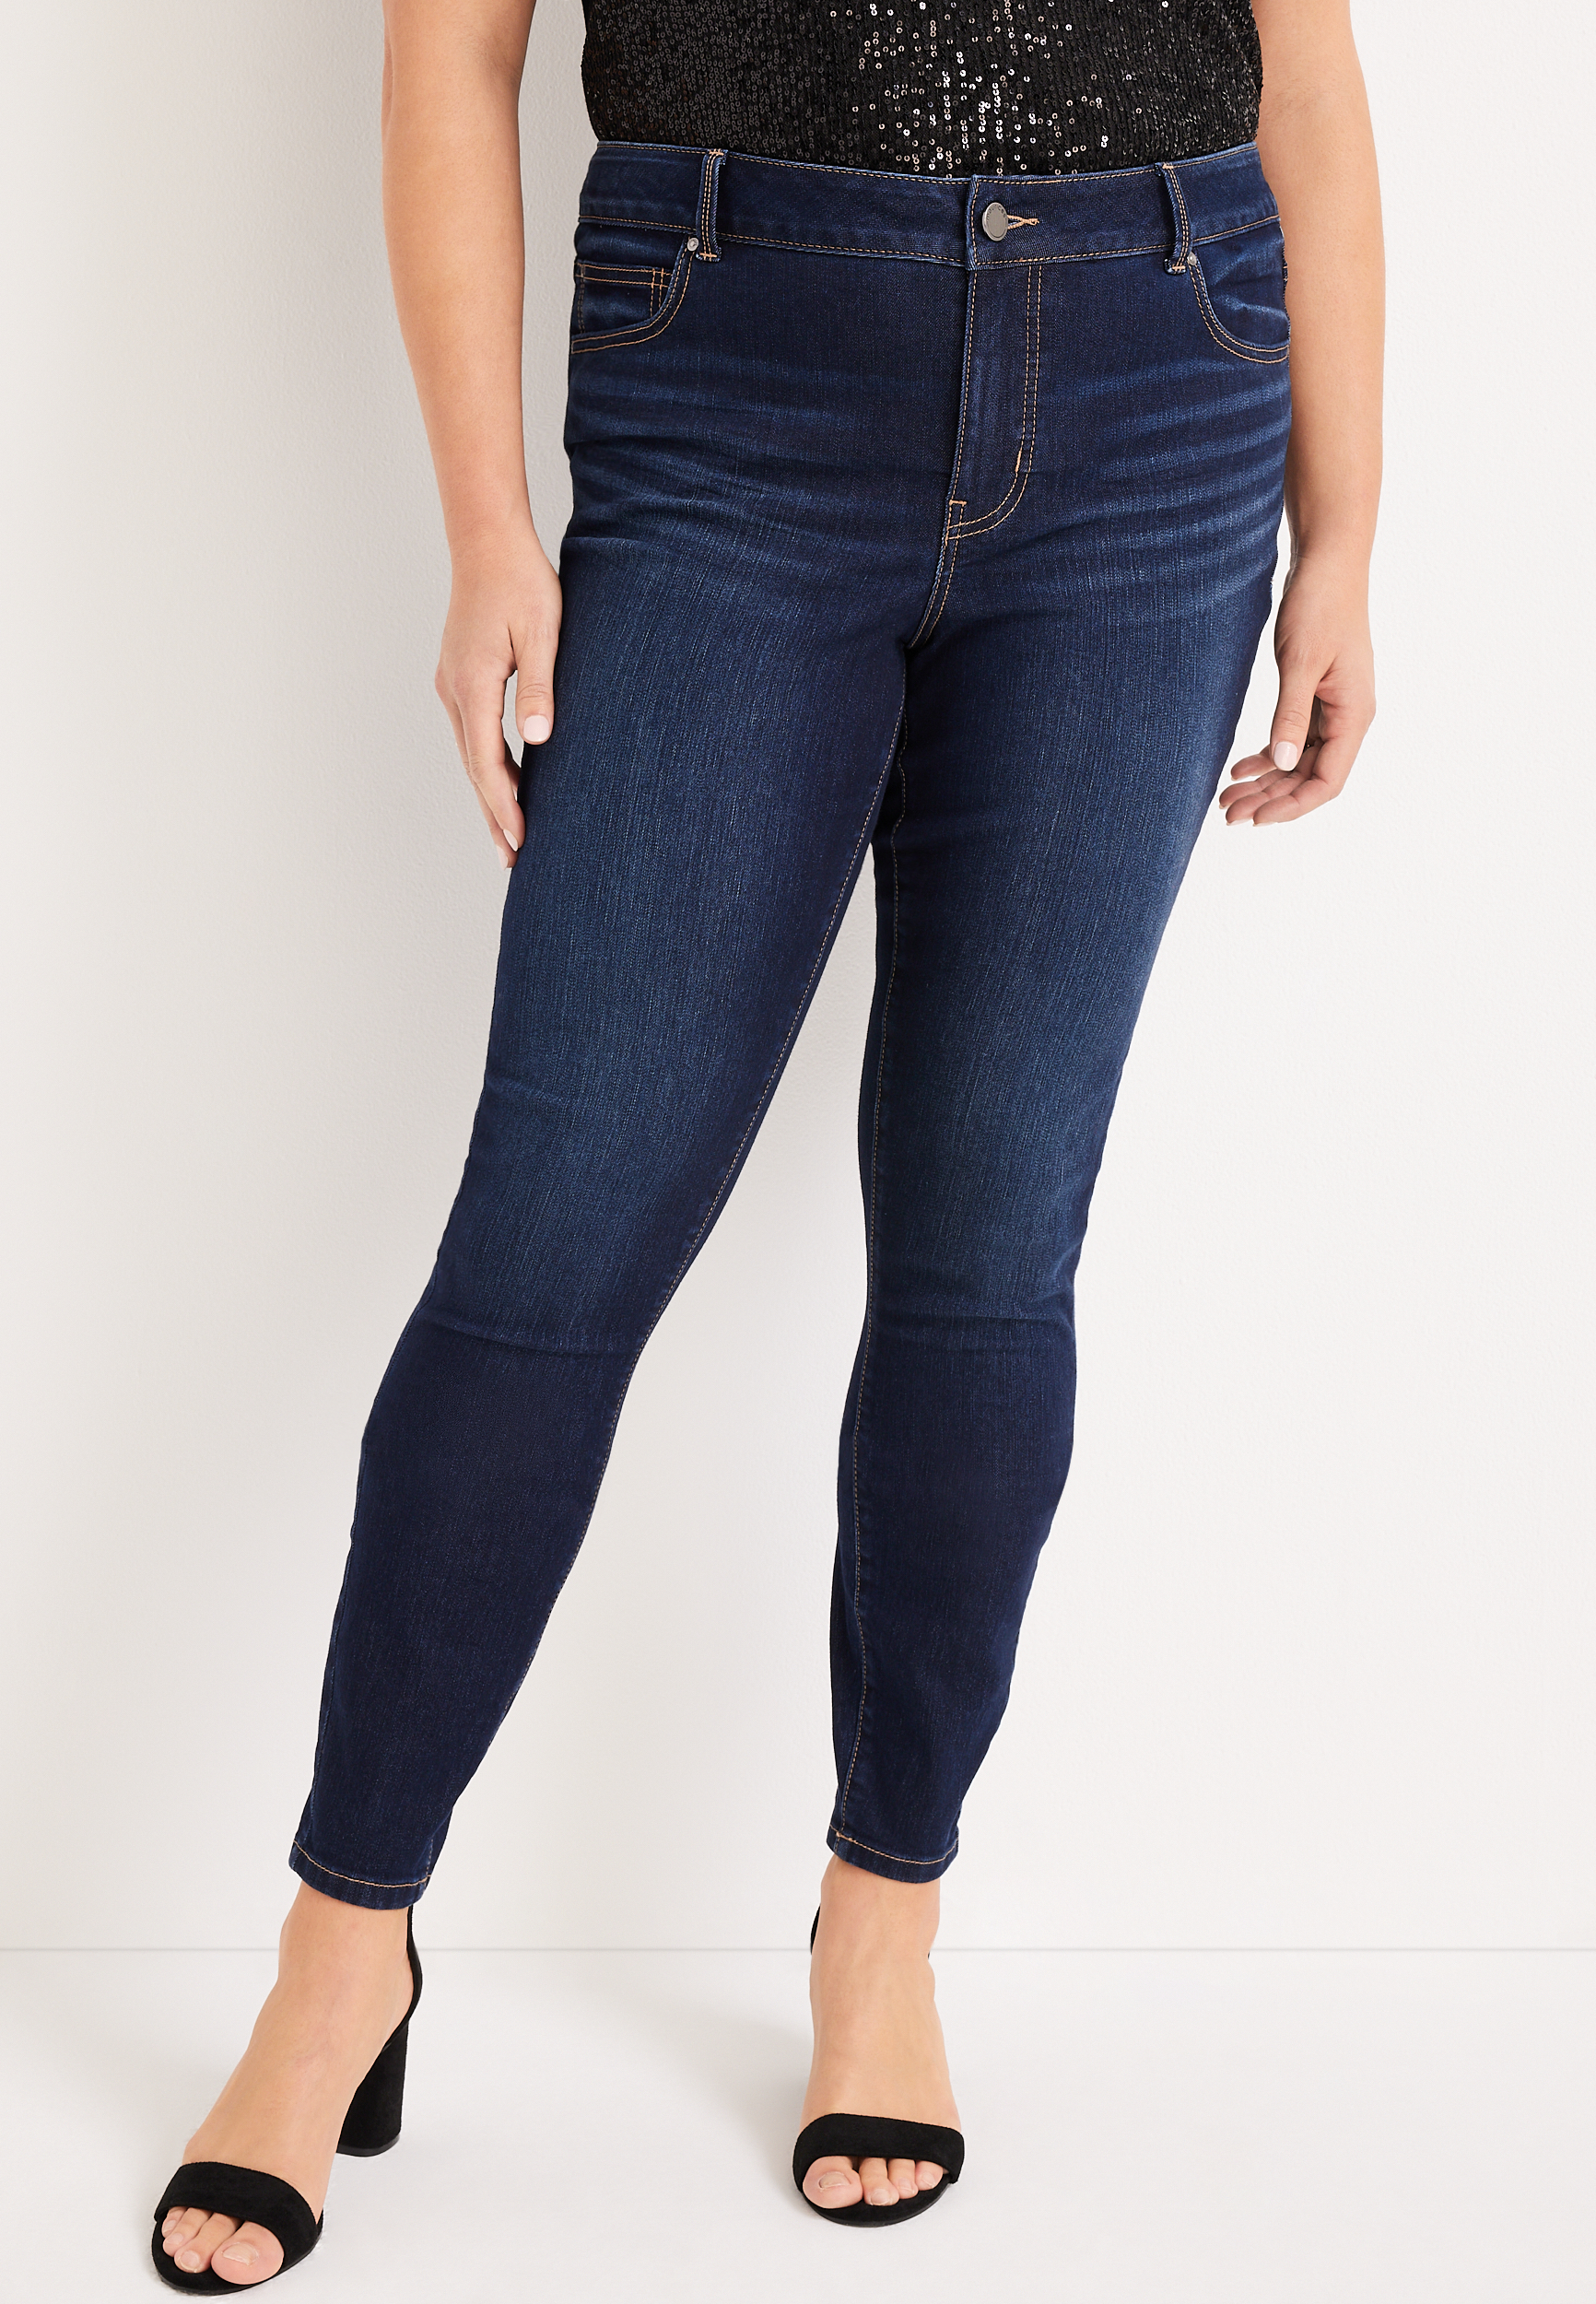 njshnmn Women's Plus Size Tall Skinny-Leg Pull-On Stretch Jean Denim Pants  with Pocket Slim Jeggings Fitness PluSize Leggings 